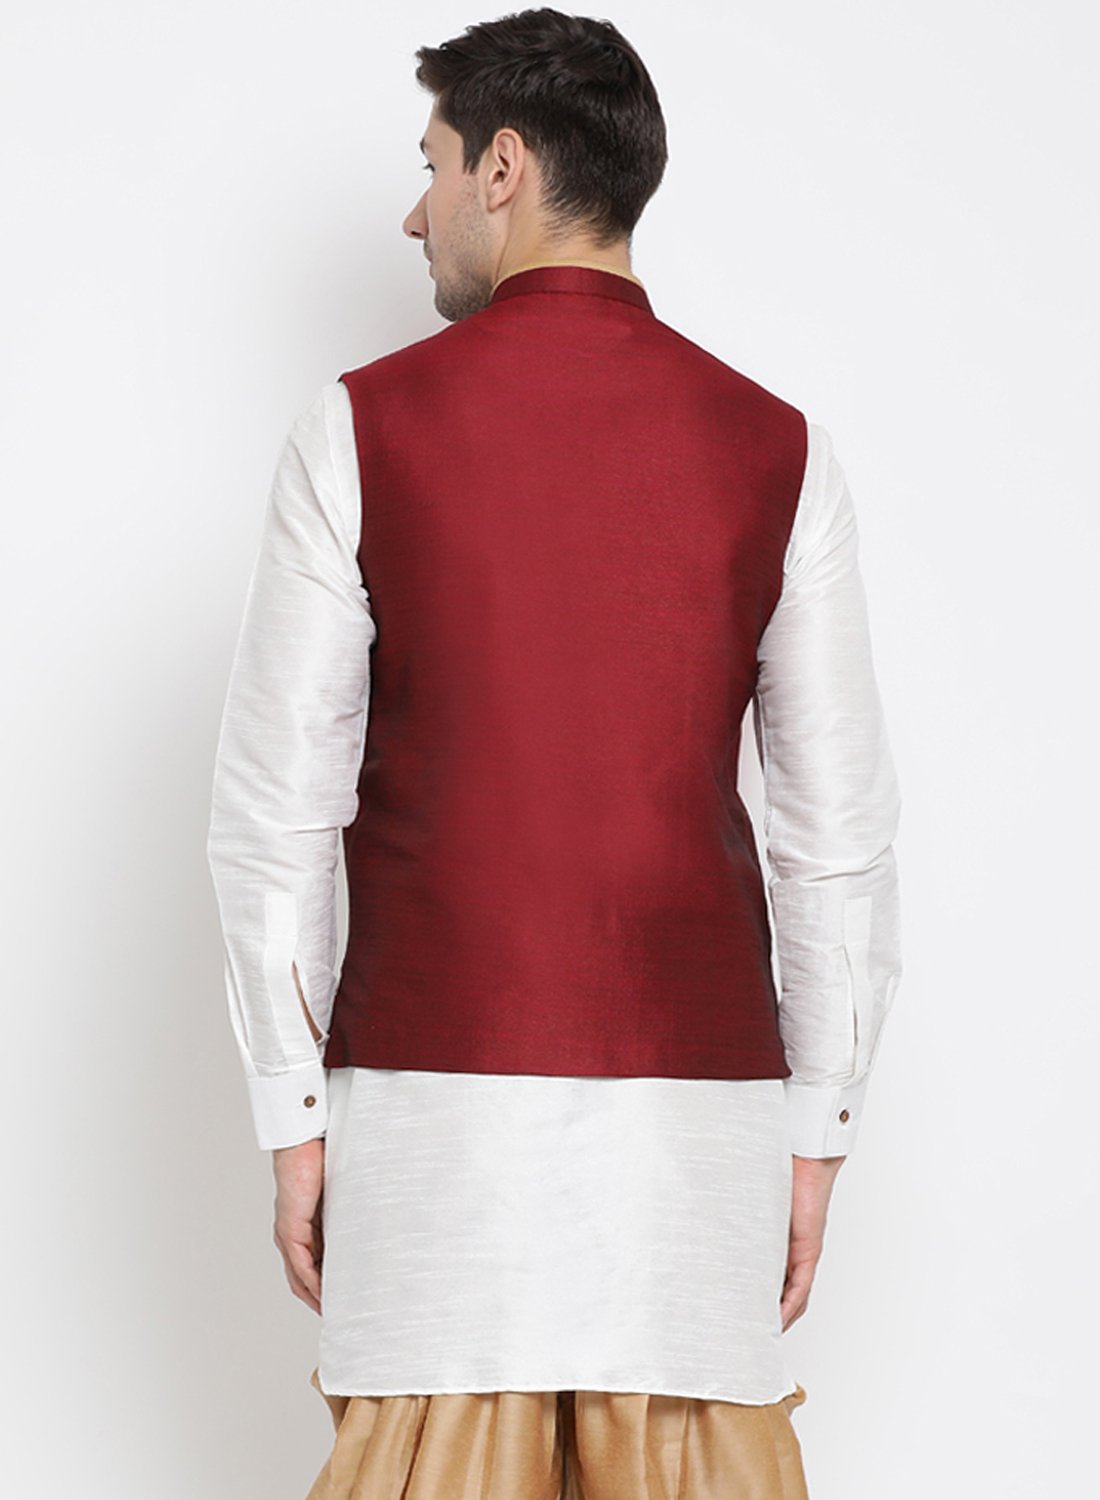 Men's Maroon Cotton Silk Blend Ethnic Jacket